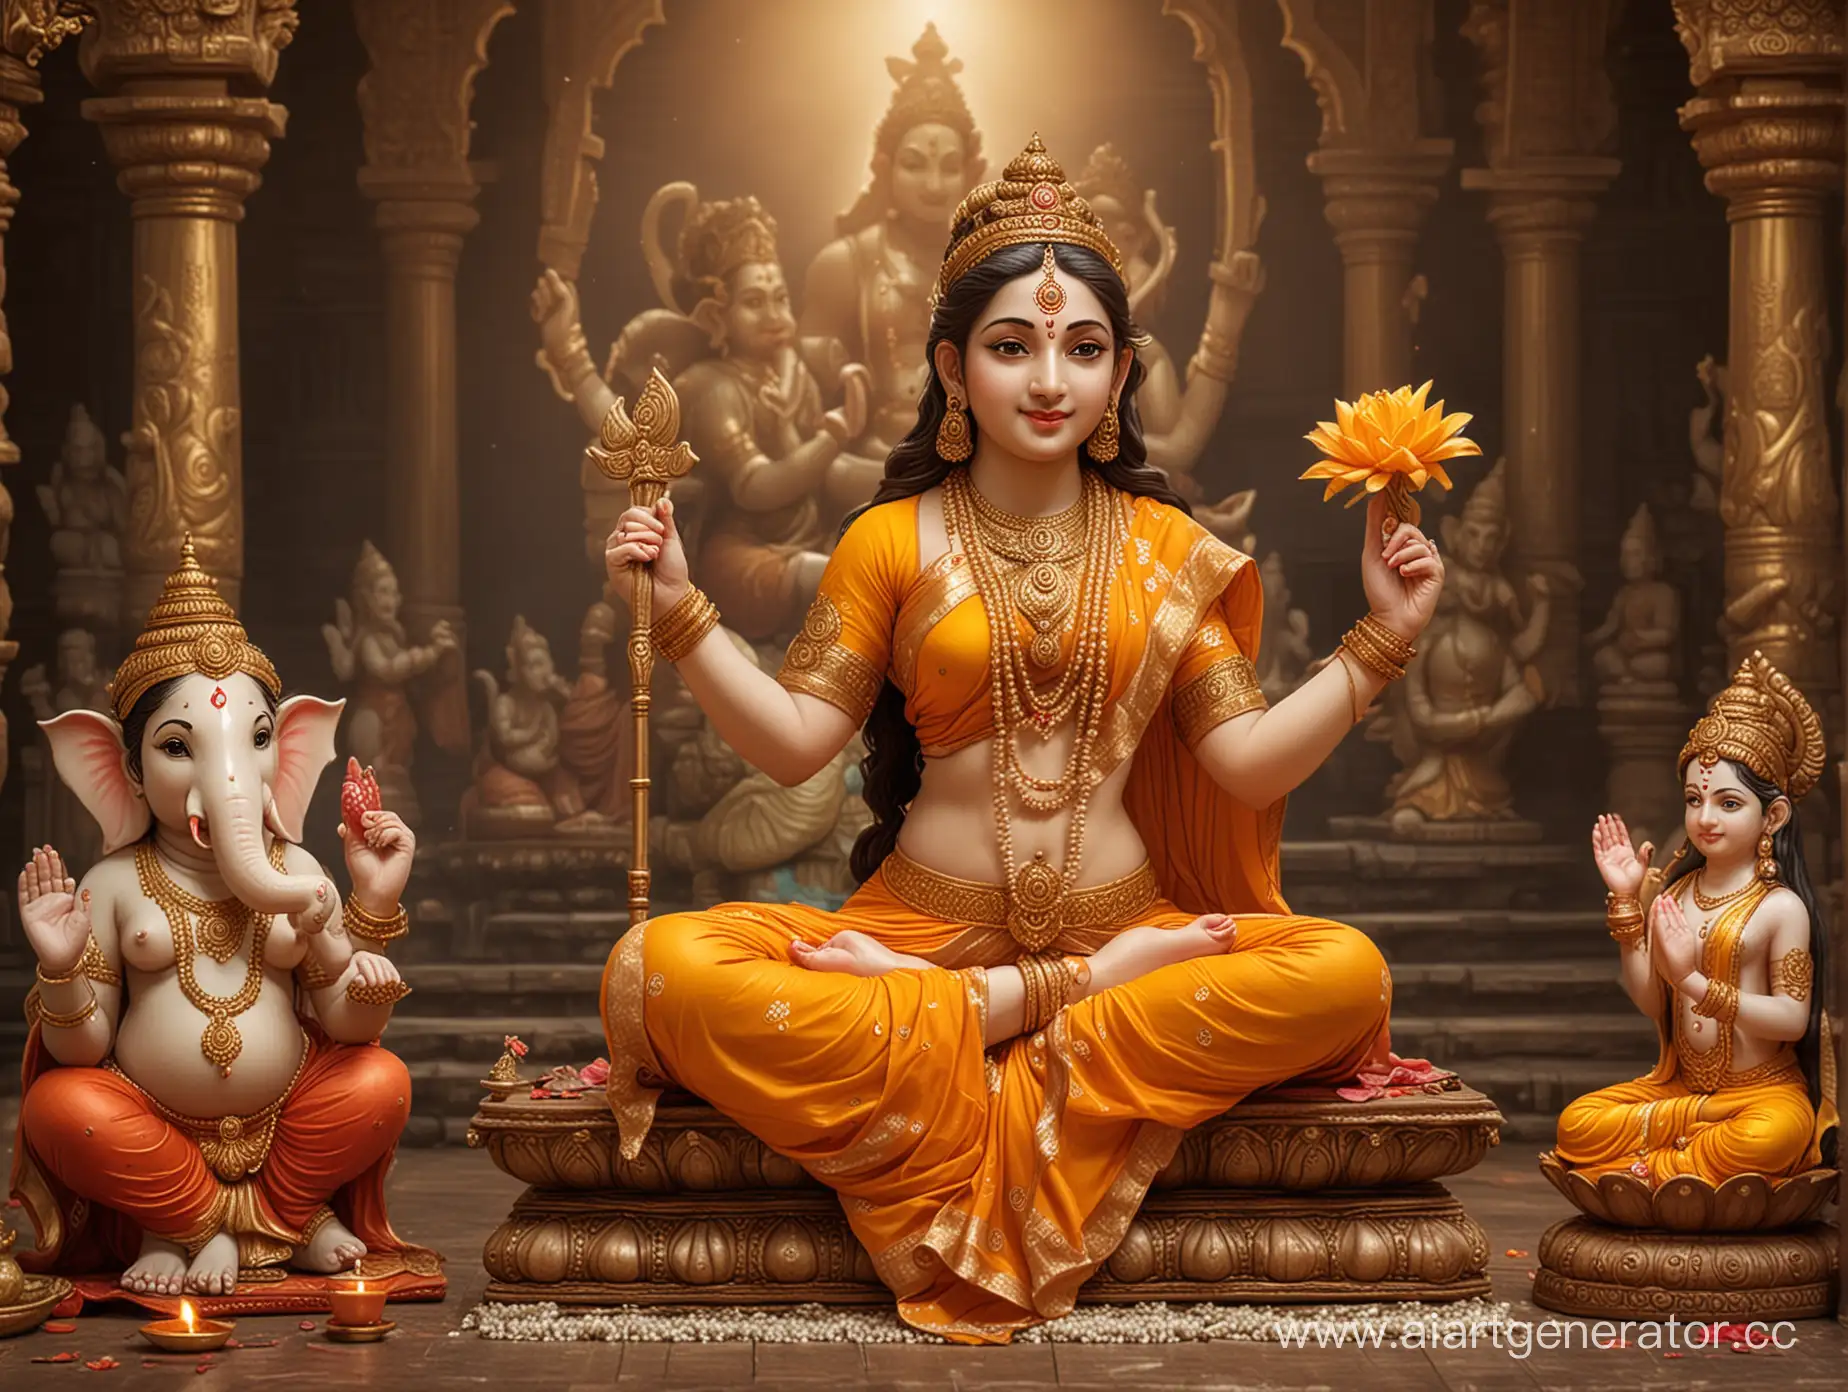 Beautiful Vedic goddess sitting next to Lord Ganesha